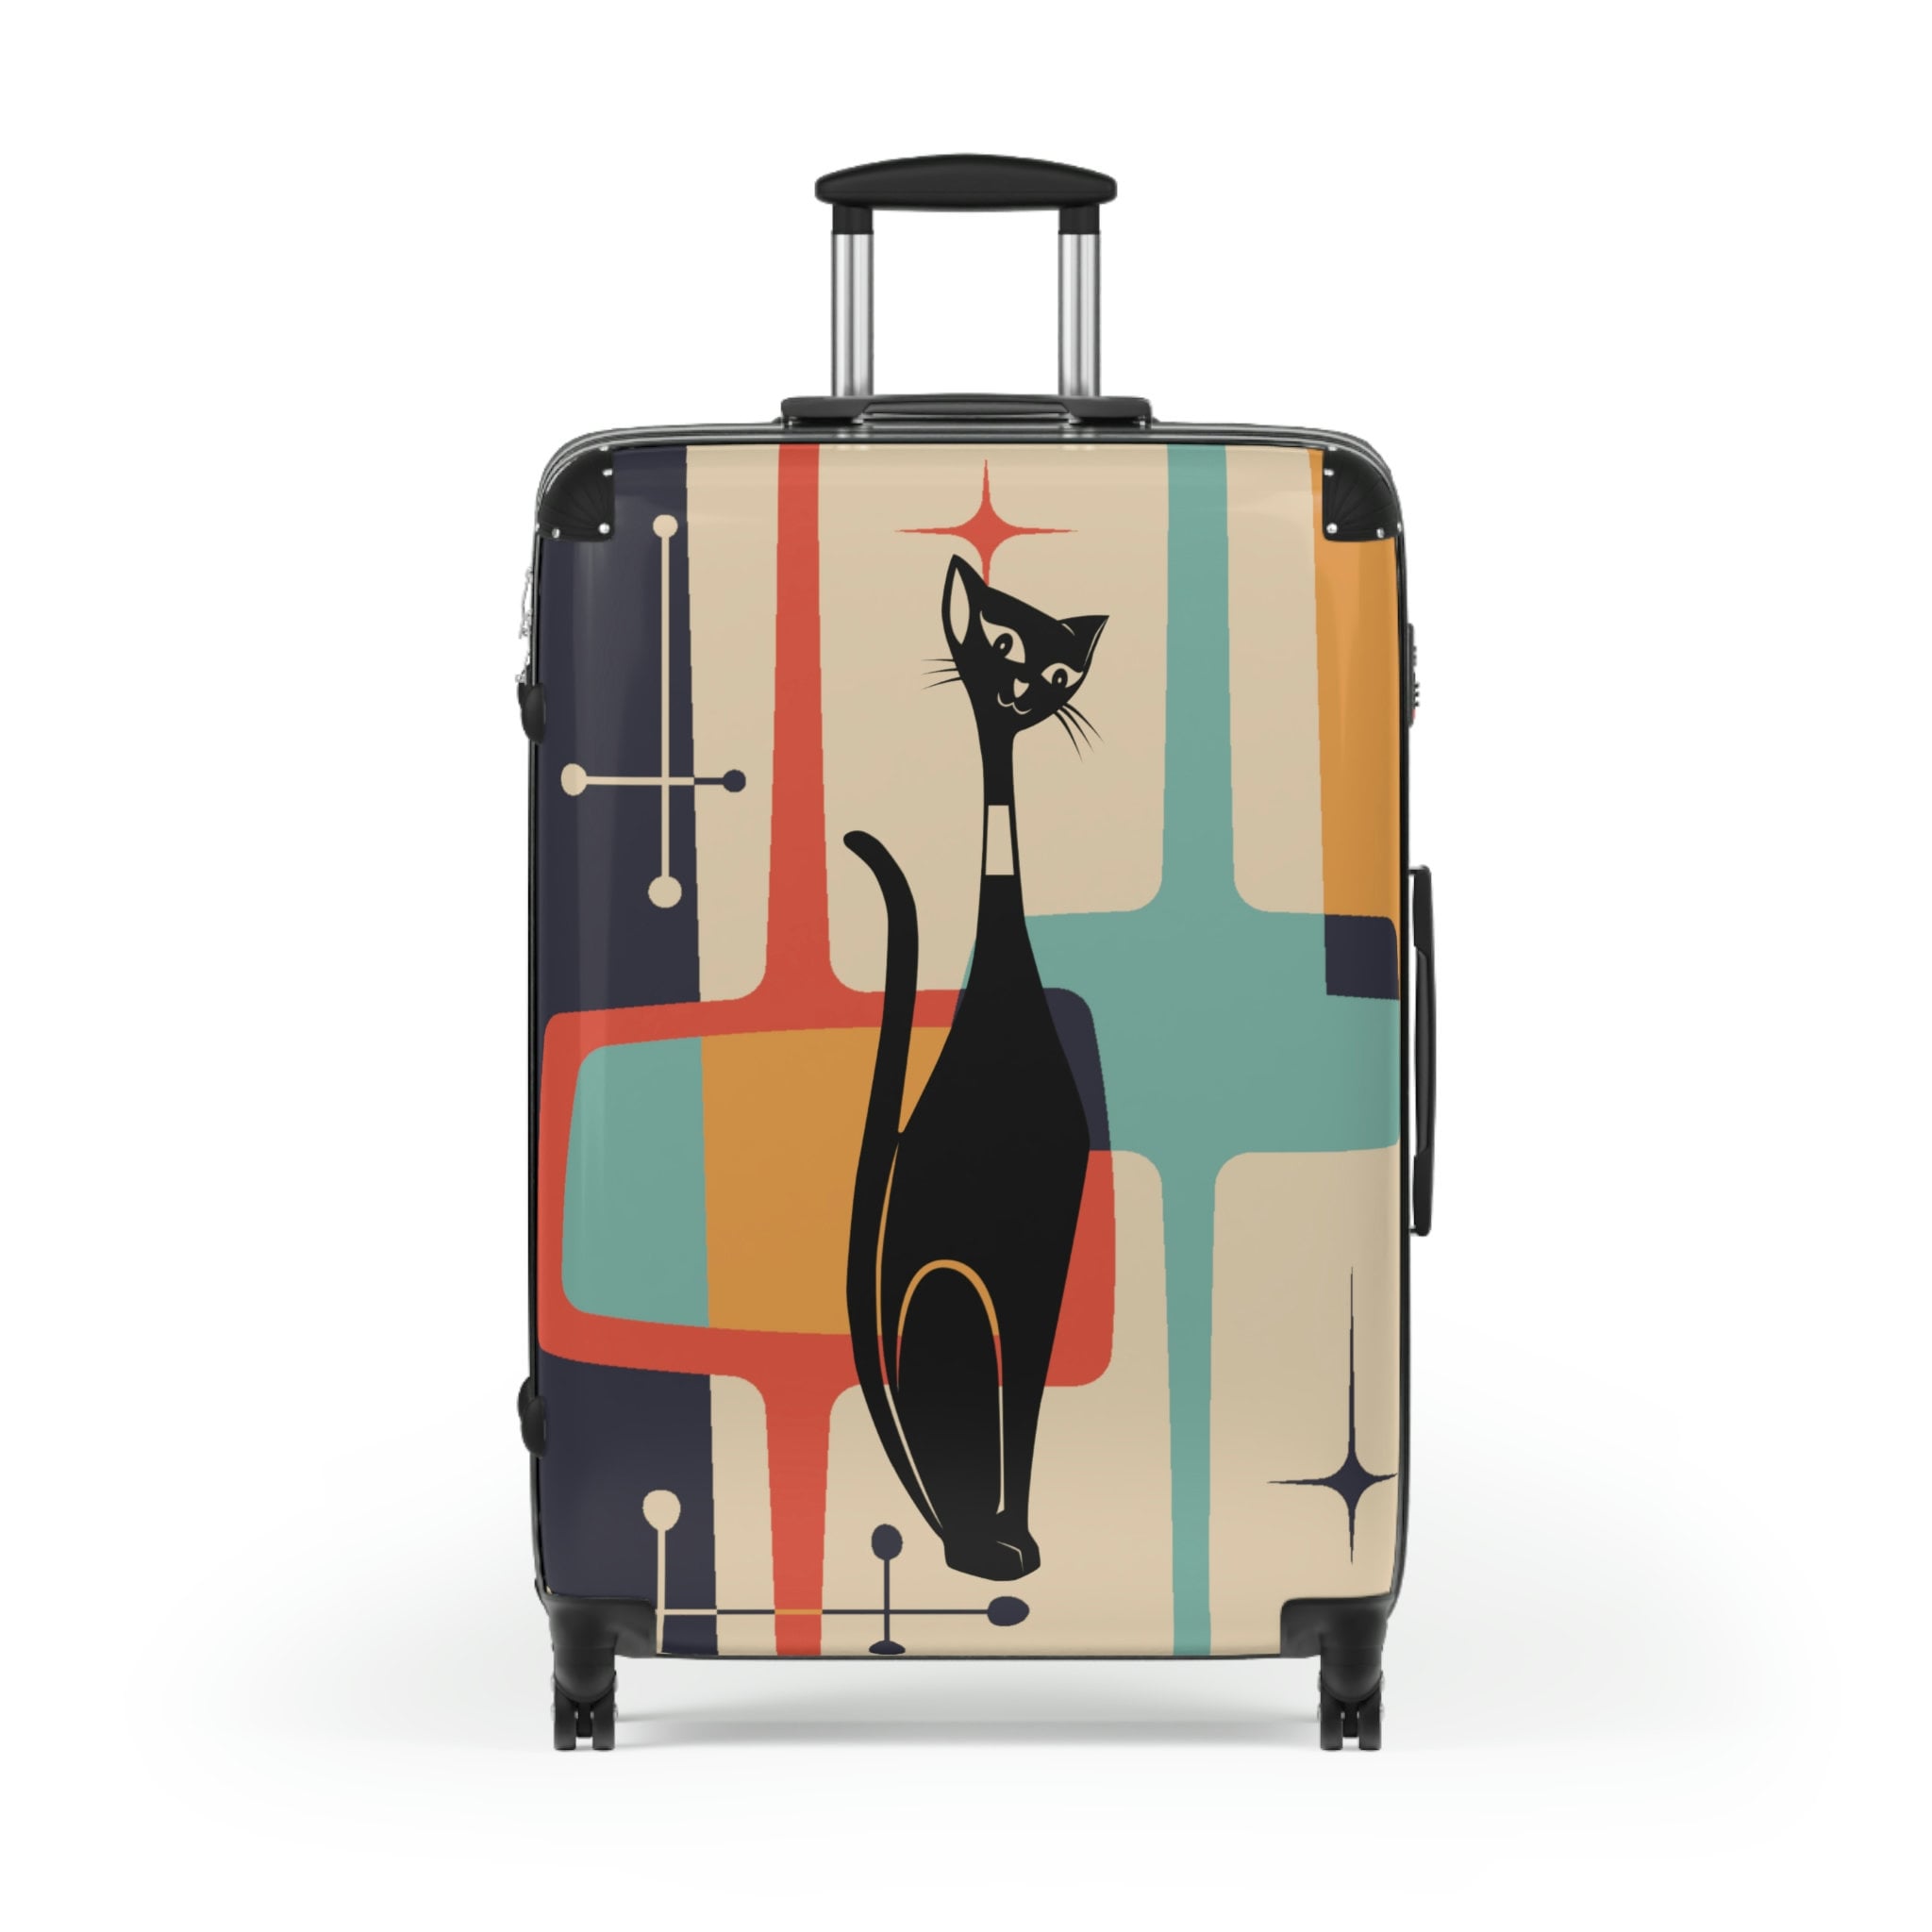 Atomic Cat Cabin Suitcase, Mid Century Modern Teal Blue, Mustard Yellow, Cream MCM Starburst Carry-On Roller Travel Luggage Set